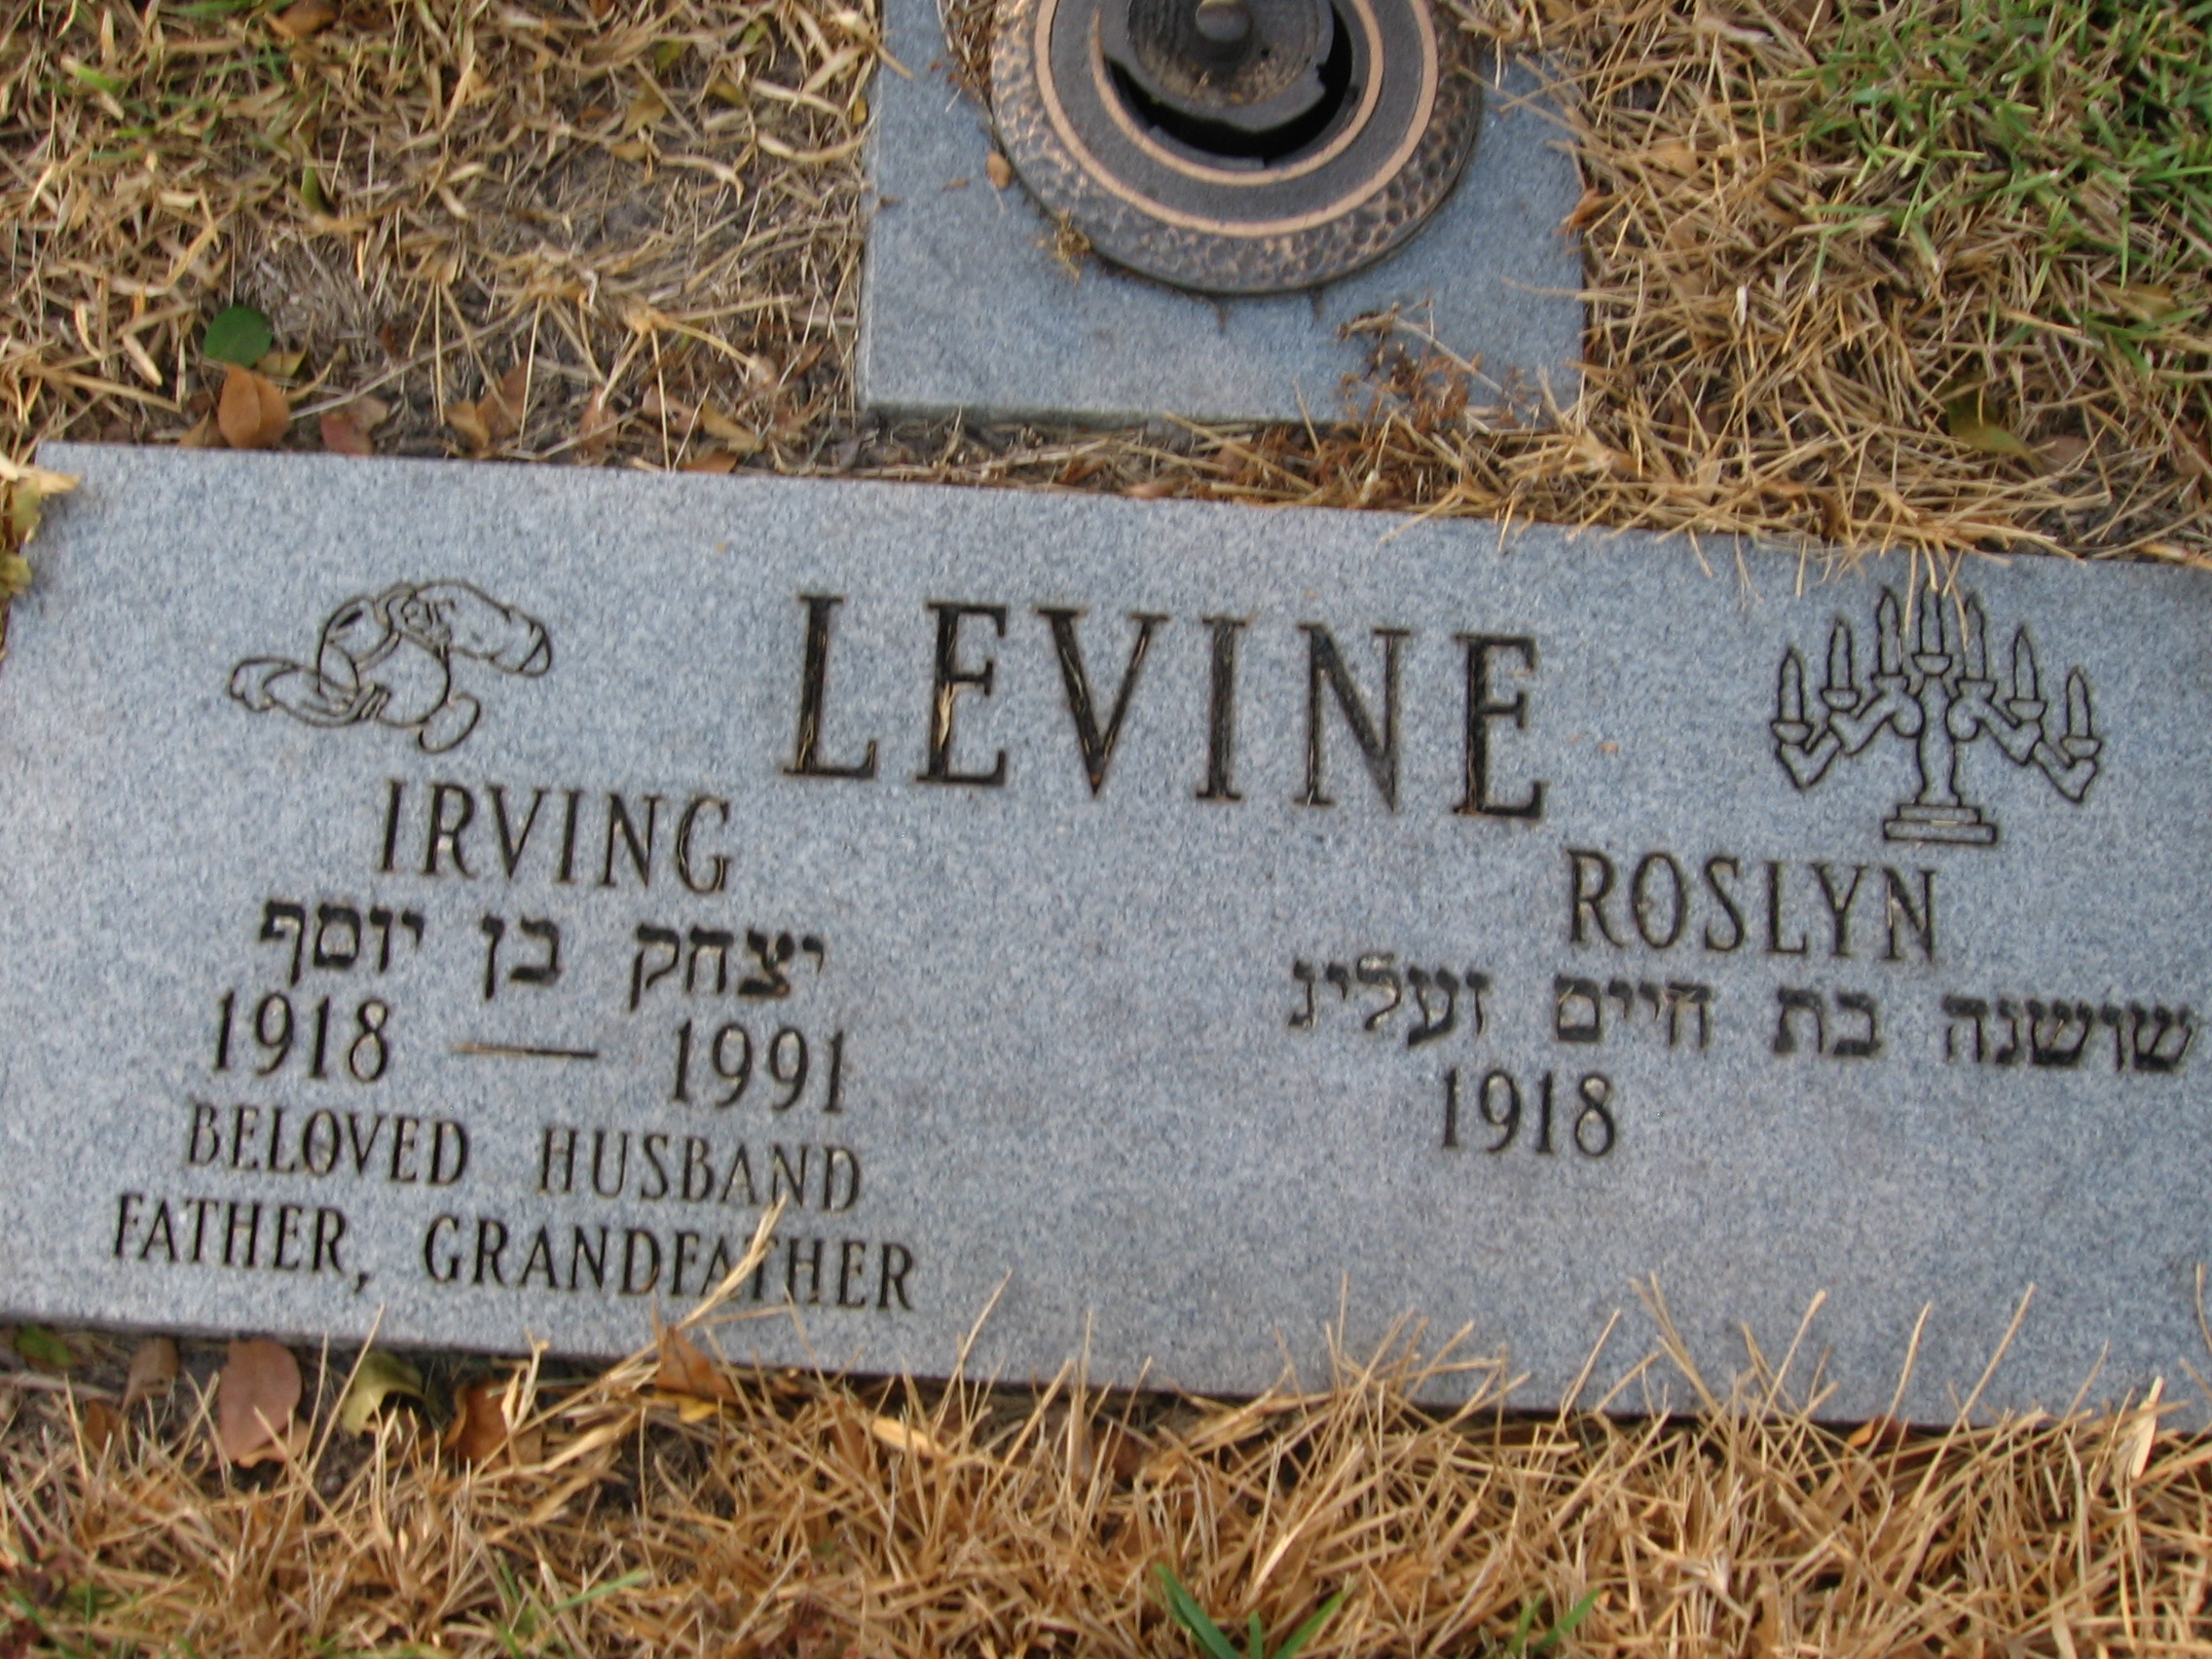 Roslyn Levine